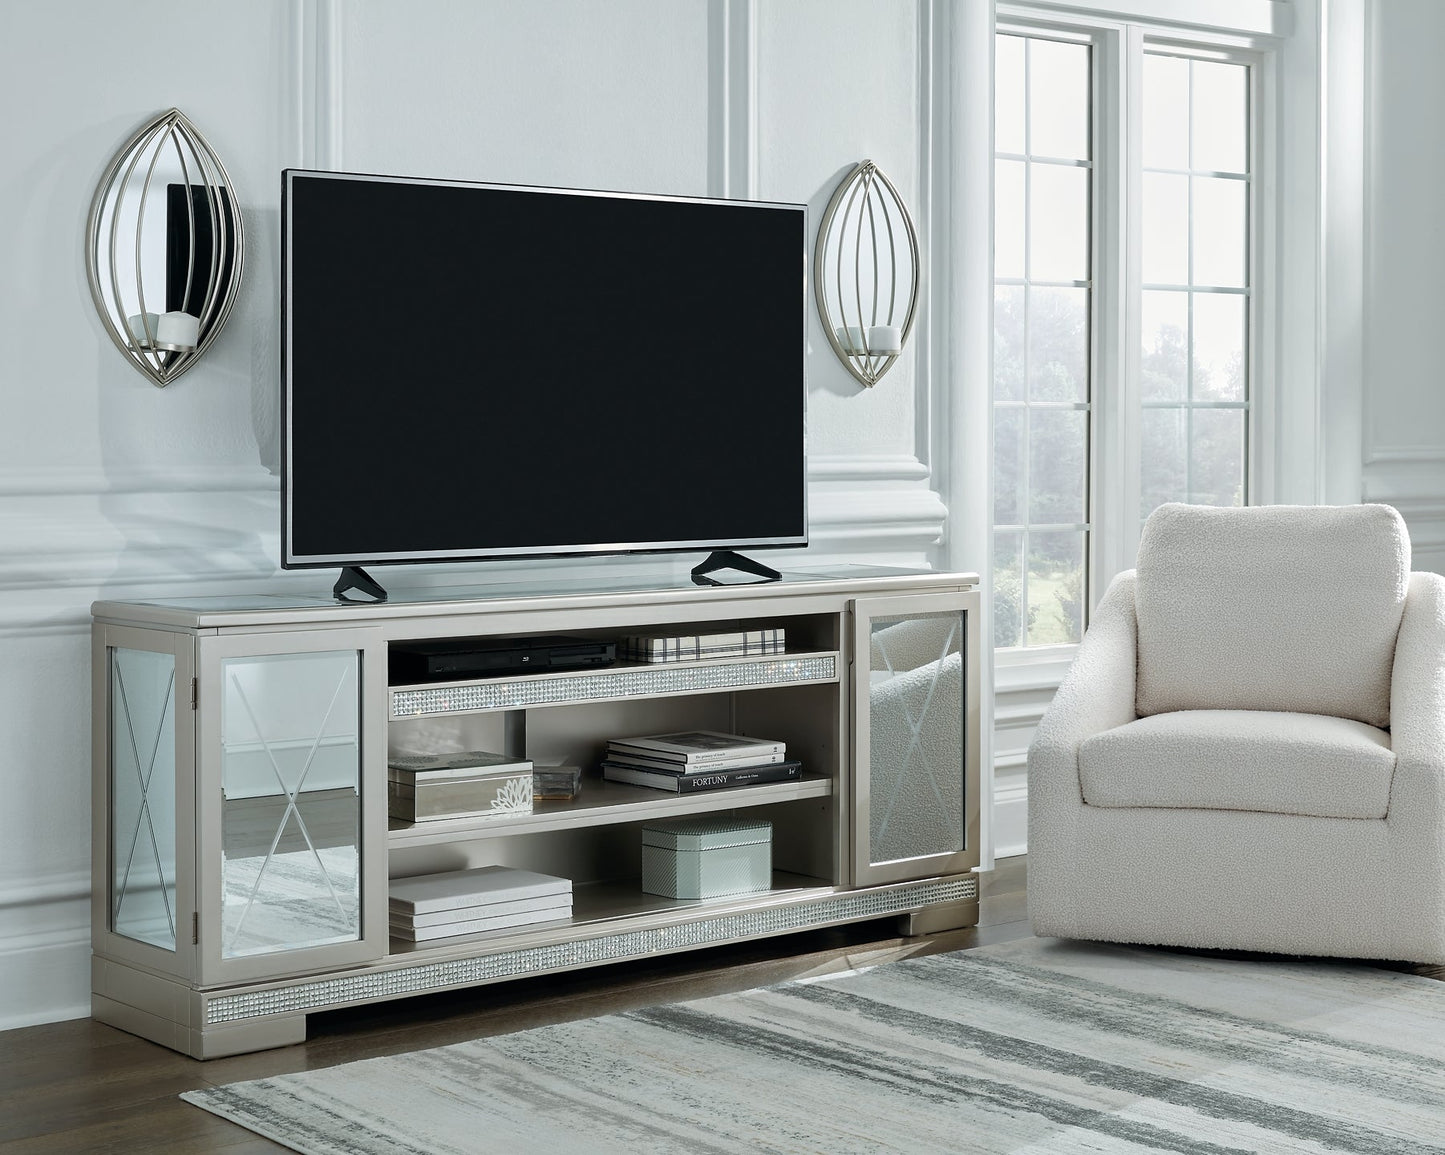 Flamory LG TV Stand w/Fireplace Option at Cloud 9 Mattress & Furniture furniture, home furnishing, home decor